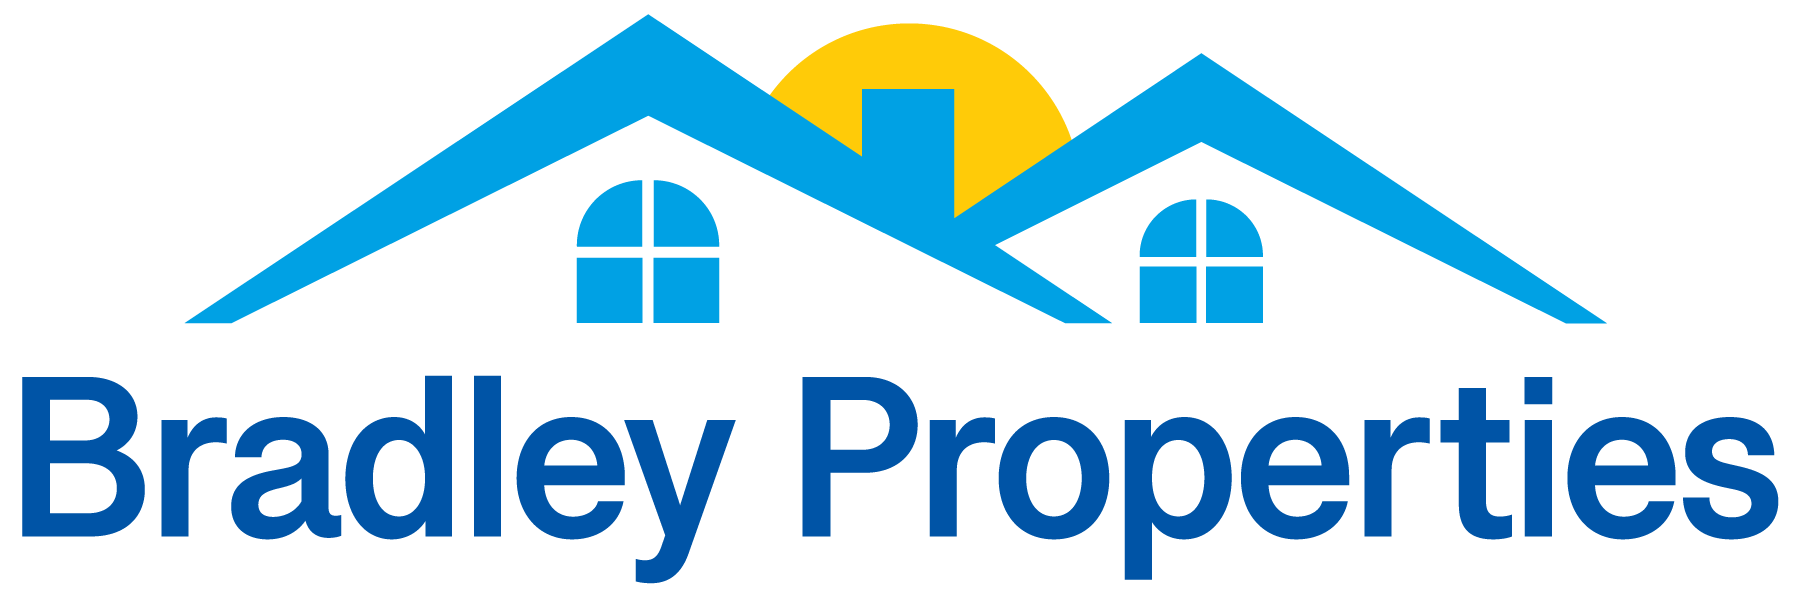 Bradley Properties Company Logo - Select To Go Home